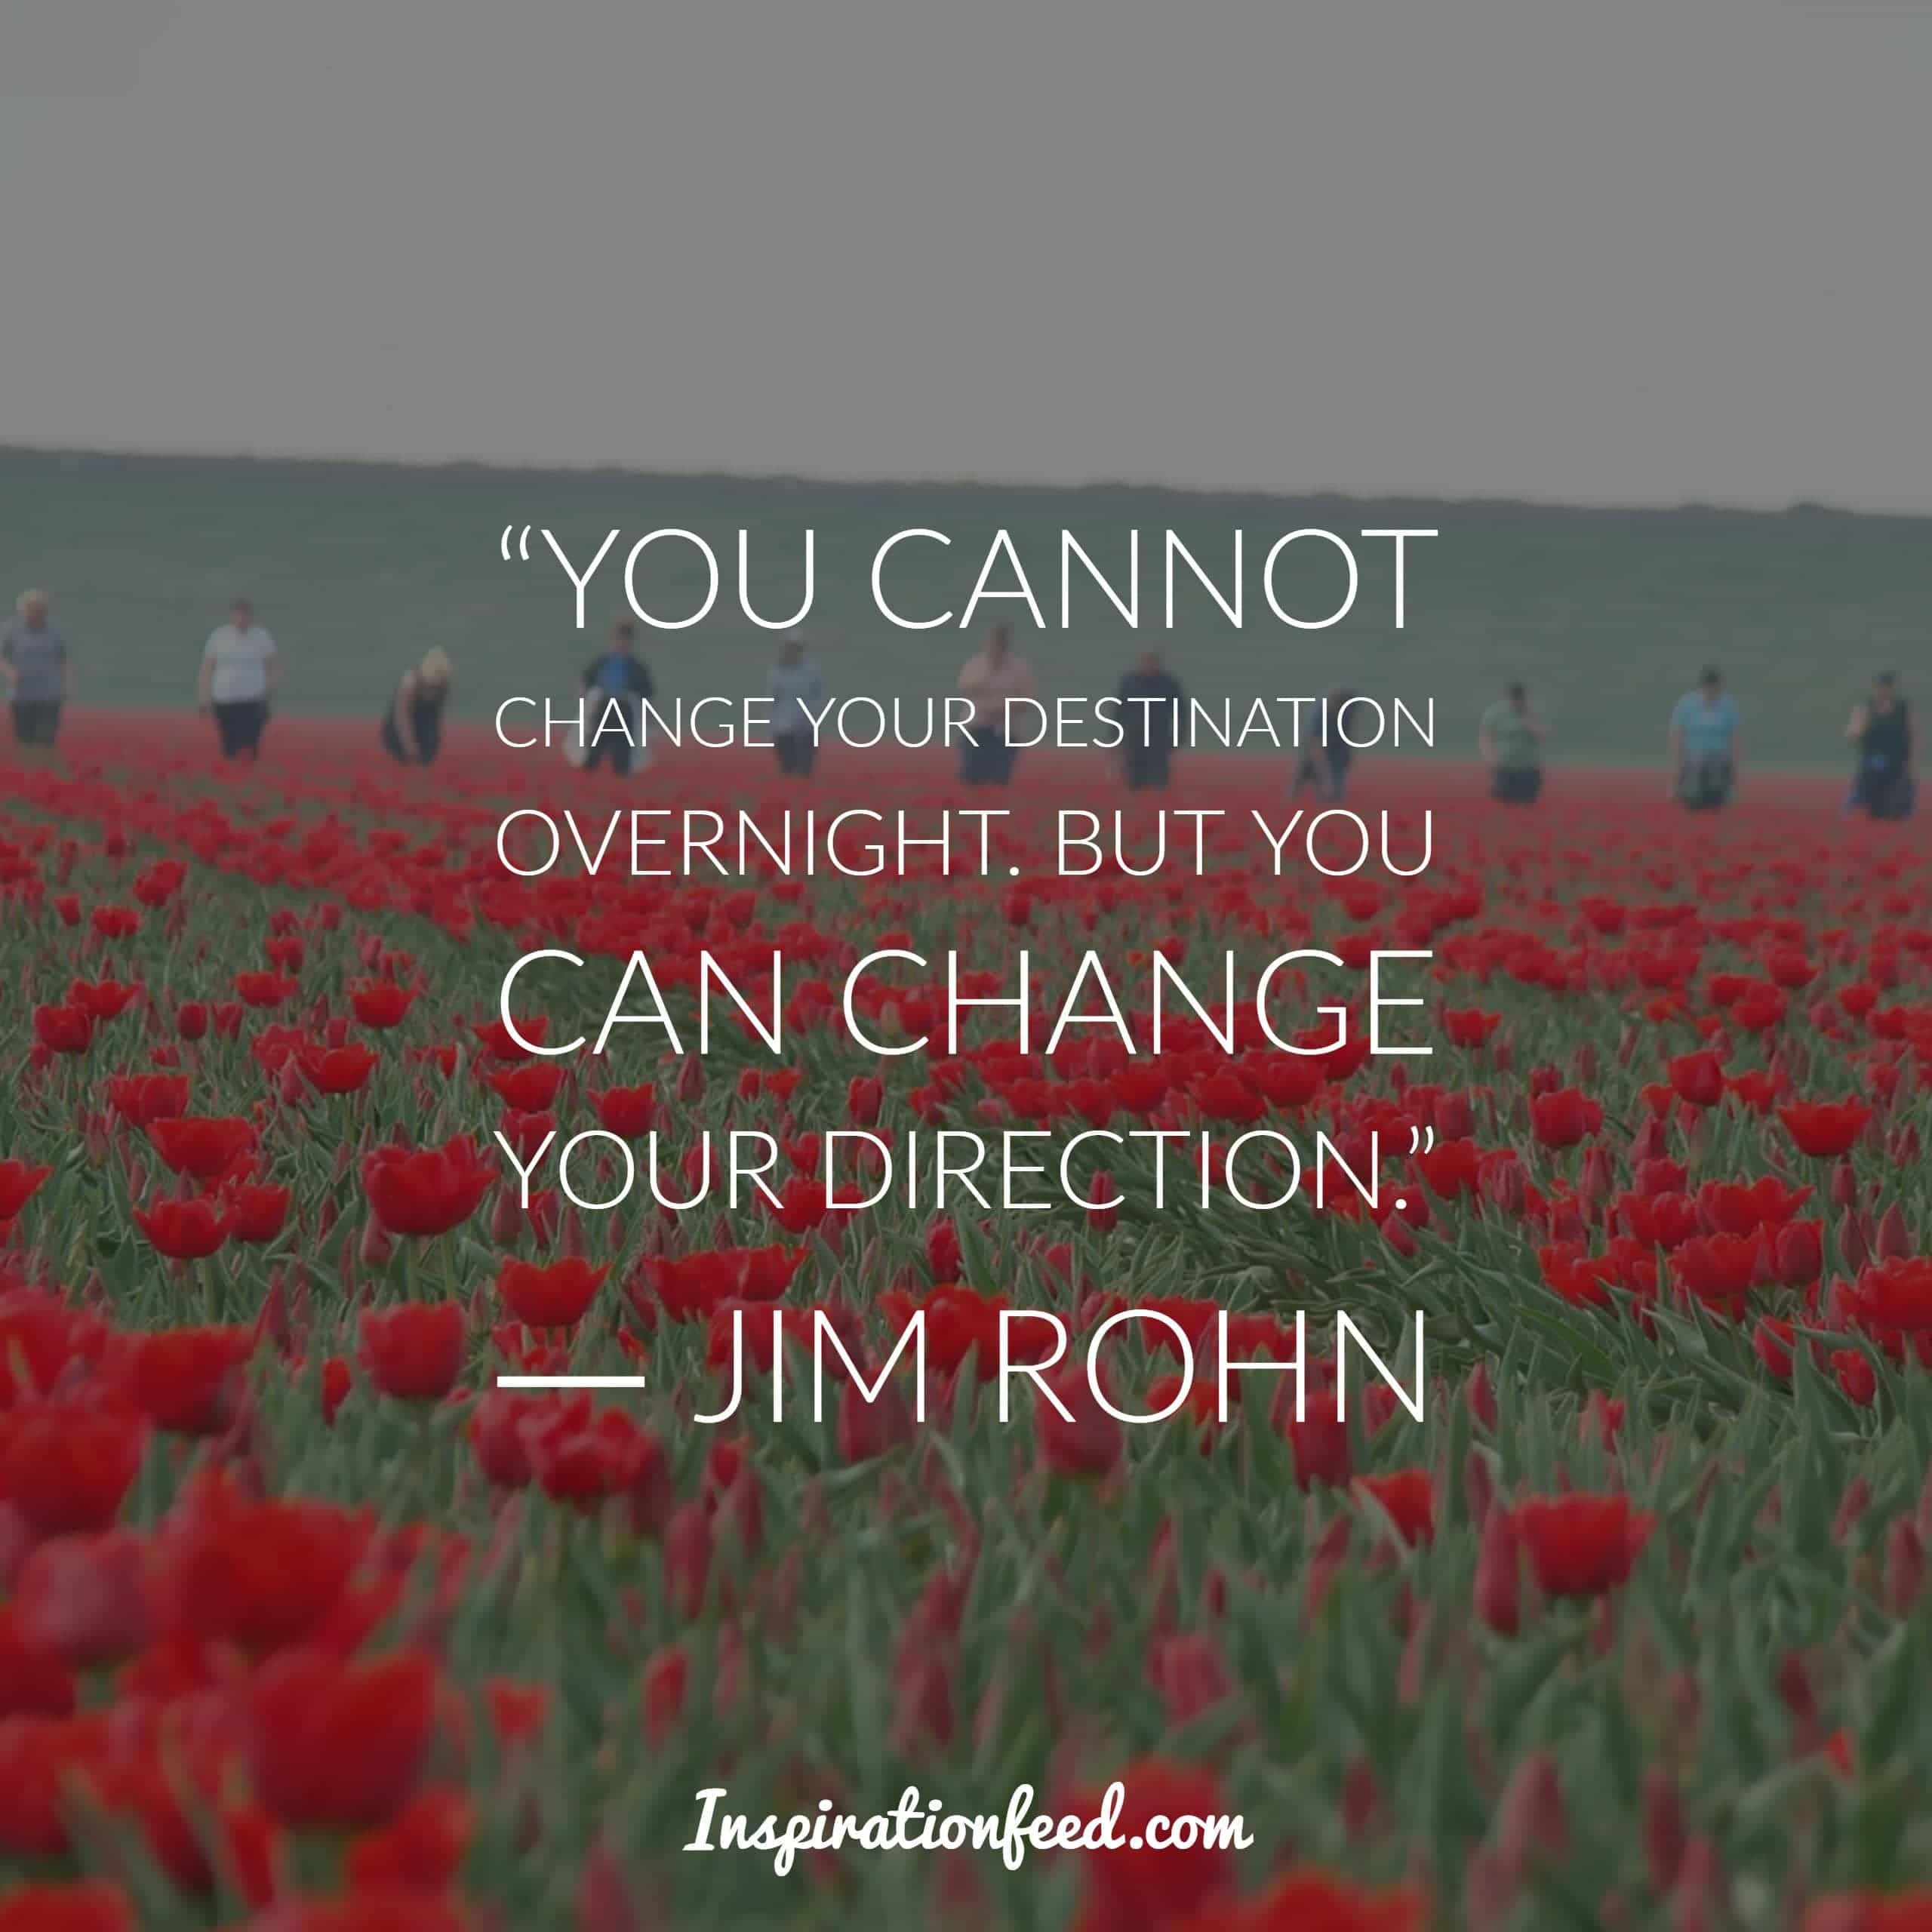 Jim Rohn Motivational Quotes
 Top 20 Motivational Jim Rohn Quotes